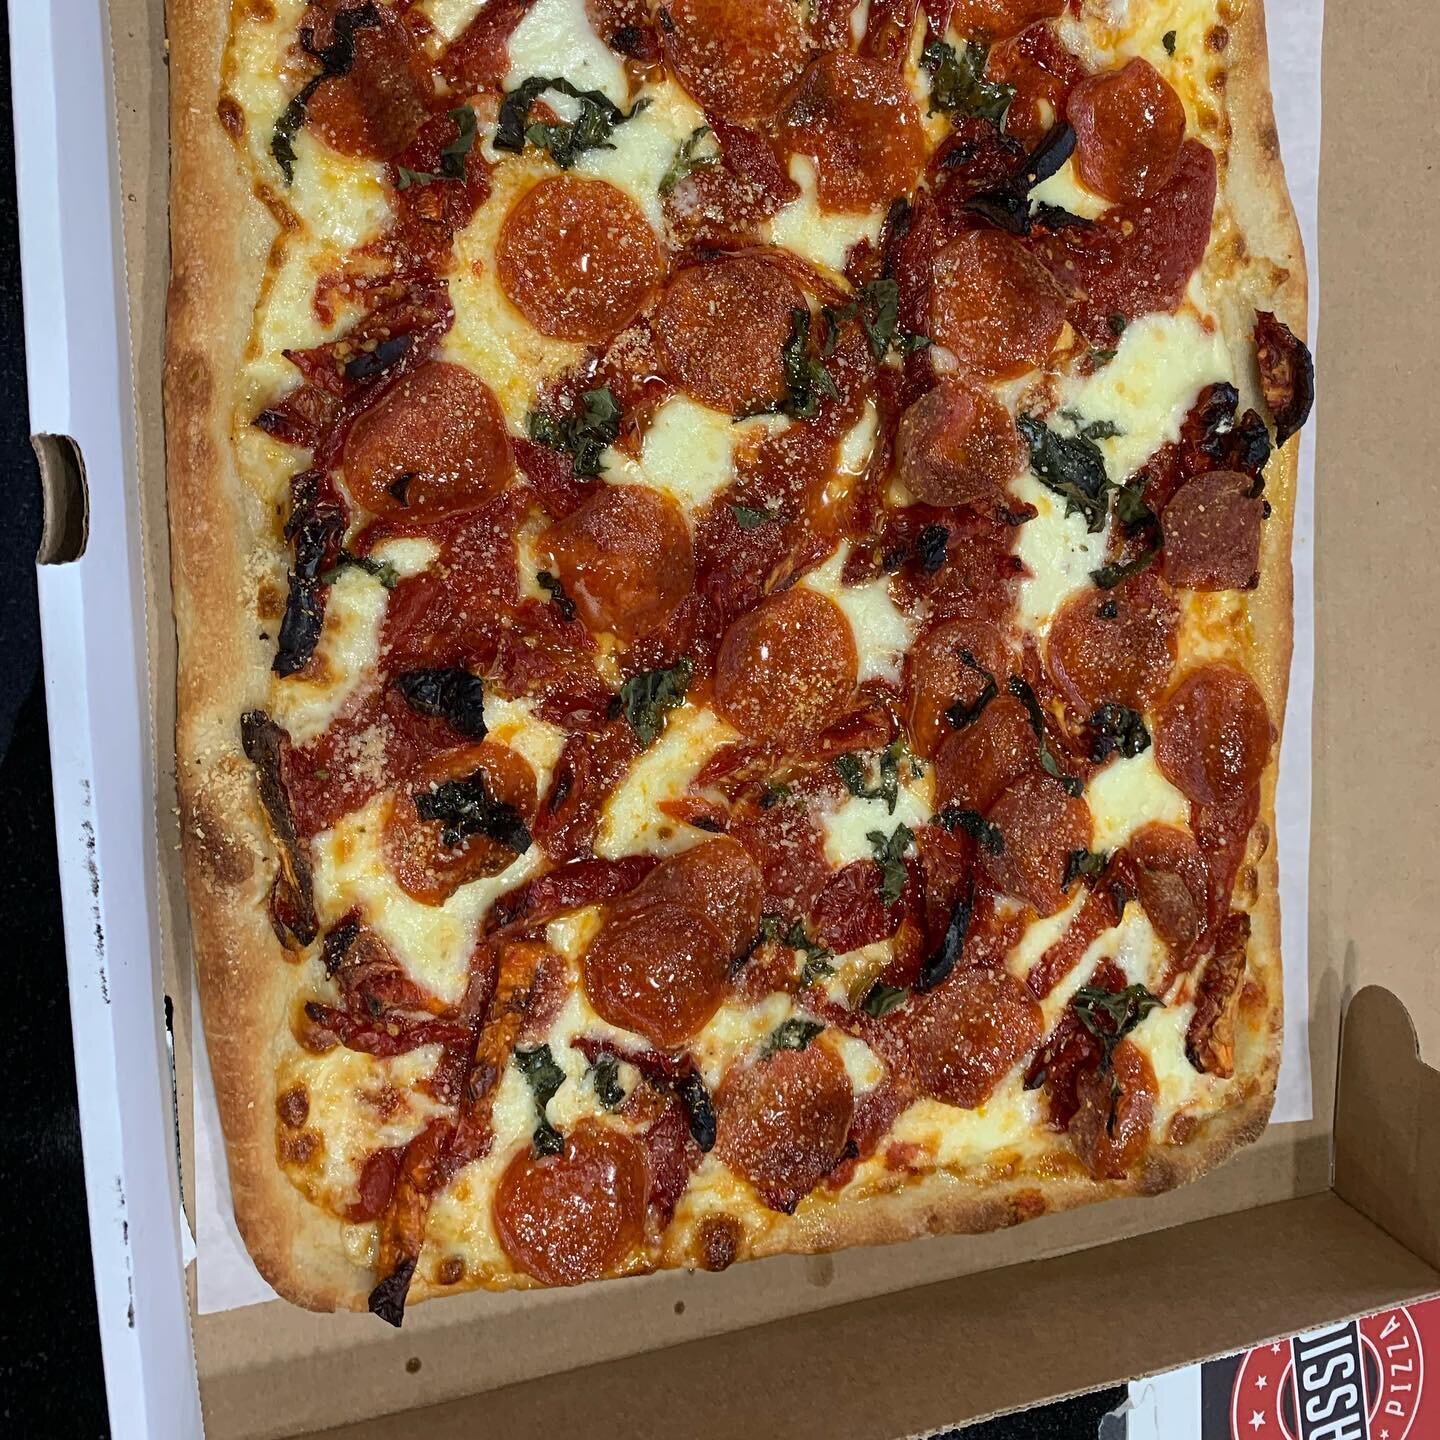 #pizza #pizzalovers #onebite #norwalk #newcanaan #westport #wilton #classicapizza #cteats #heynorwalk #heystamford #stamford #bestpizza #fcfoodie #cteats #cteatsout #norwalkdmv #heystamford